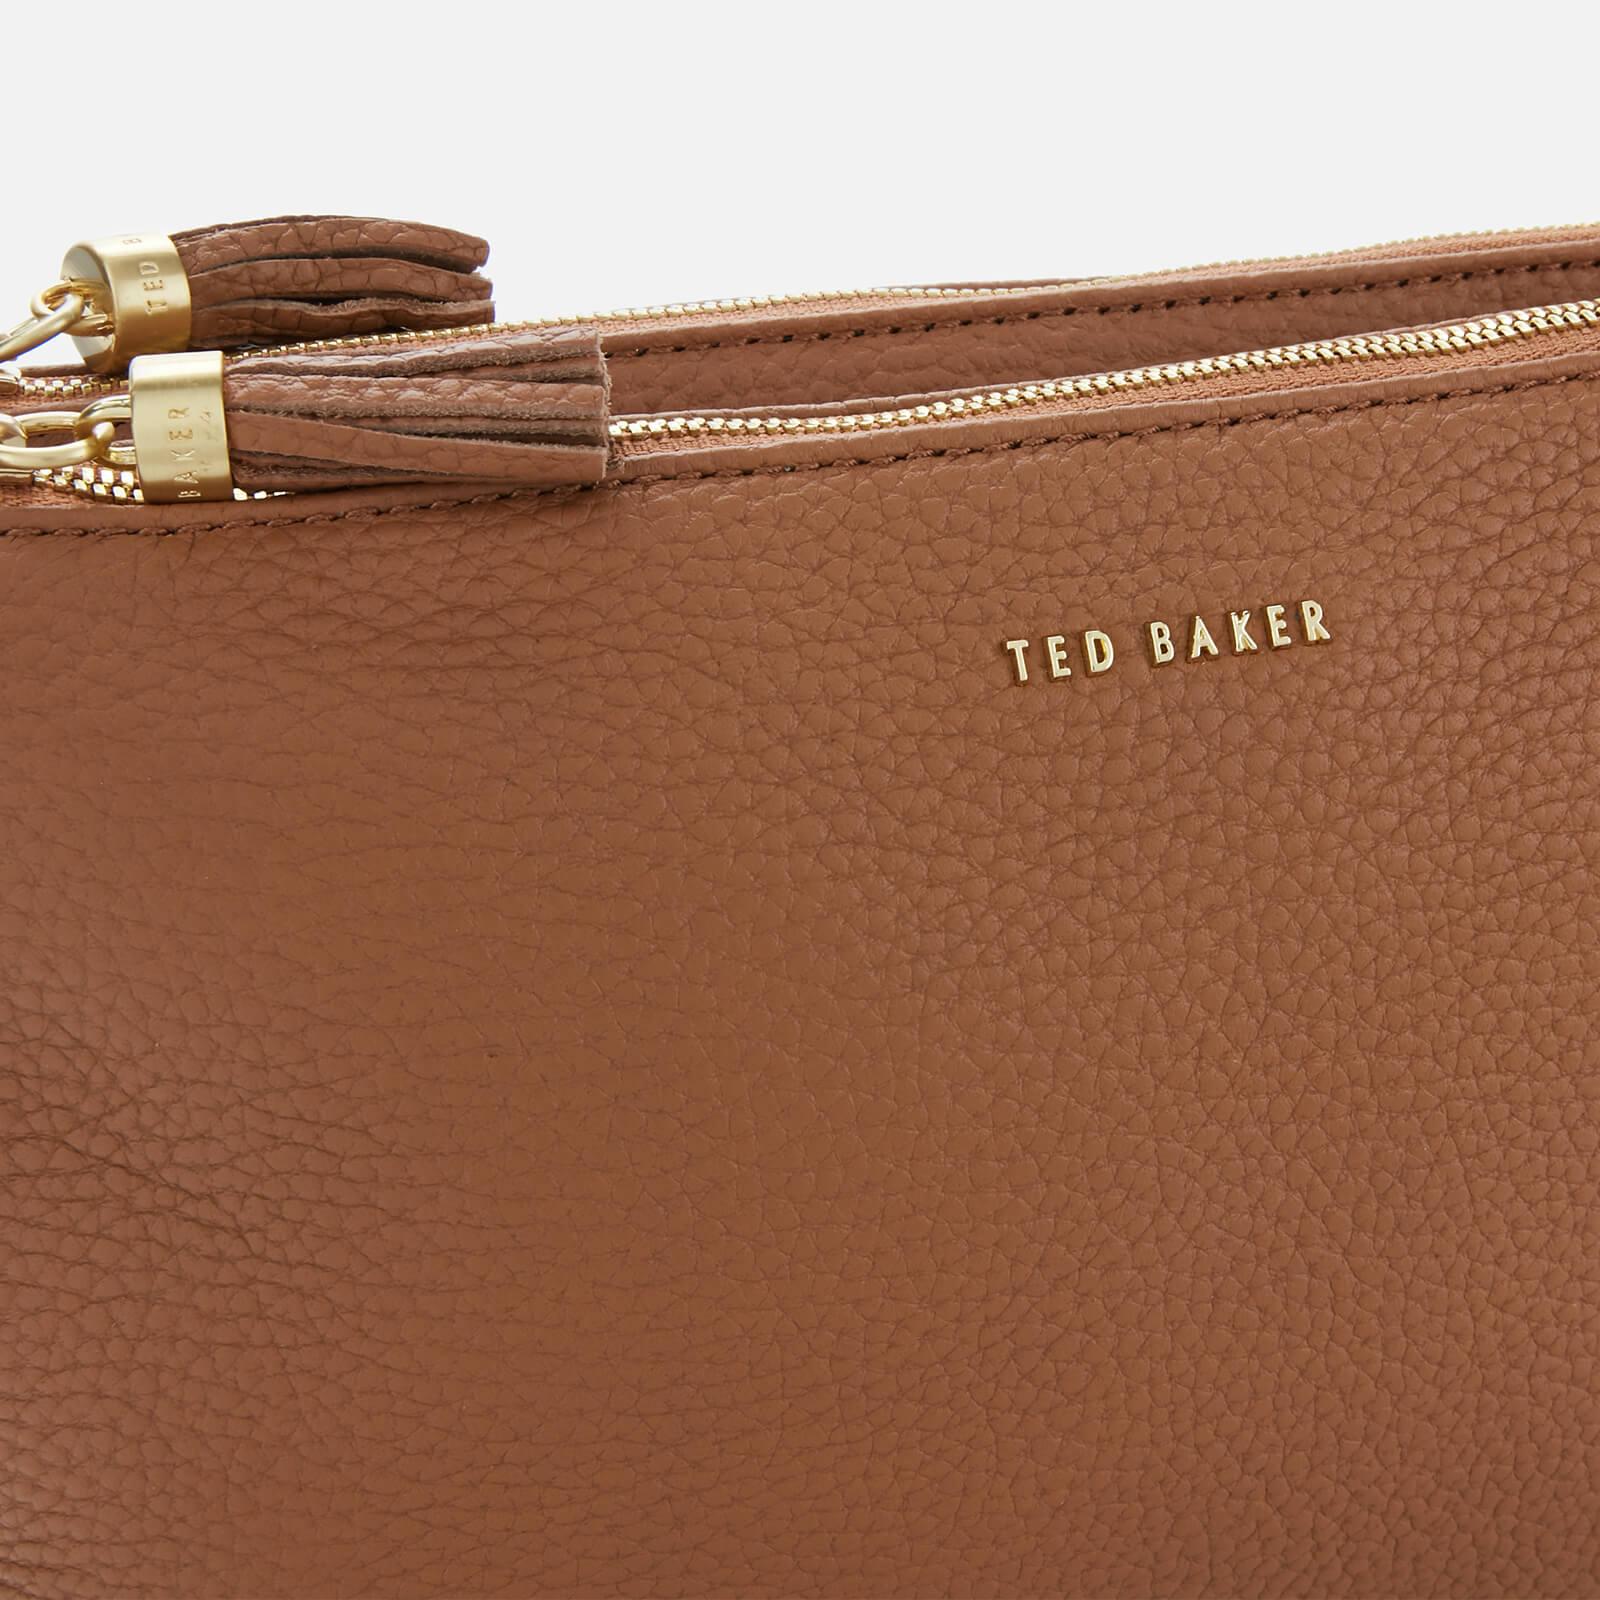 Ted Baker Tassel Leather Double Zip Cross Body Bag in Brown | Lyst